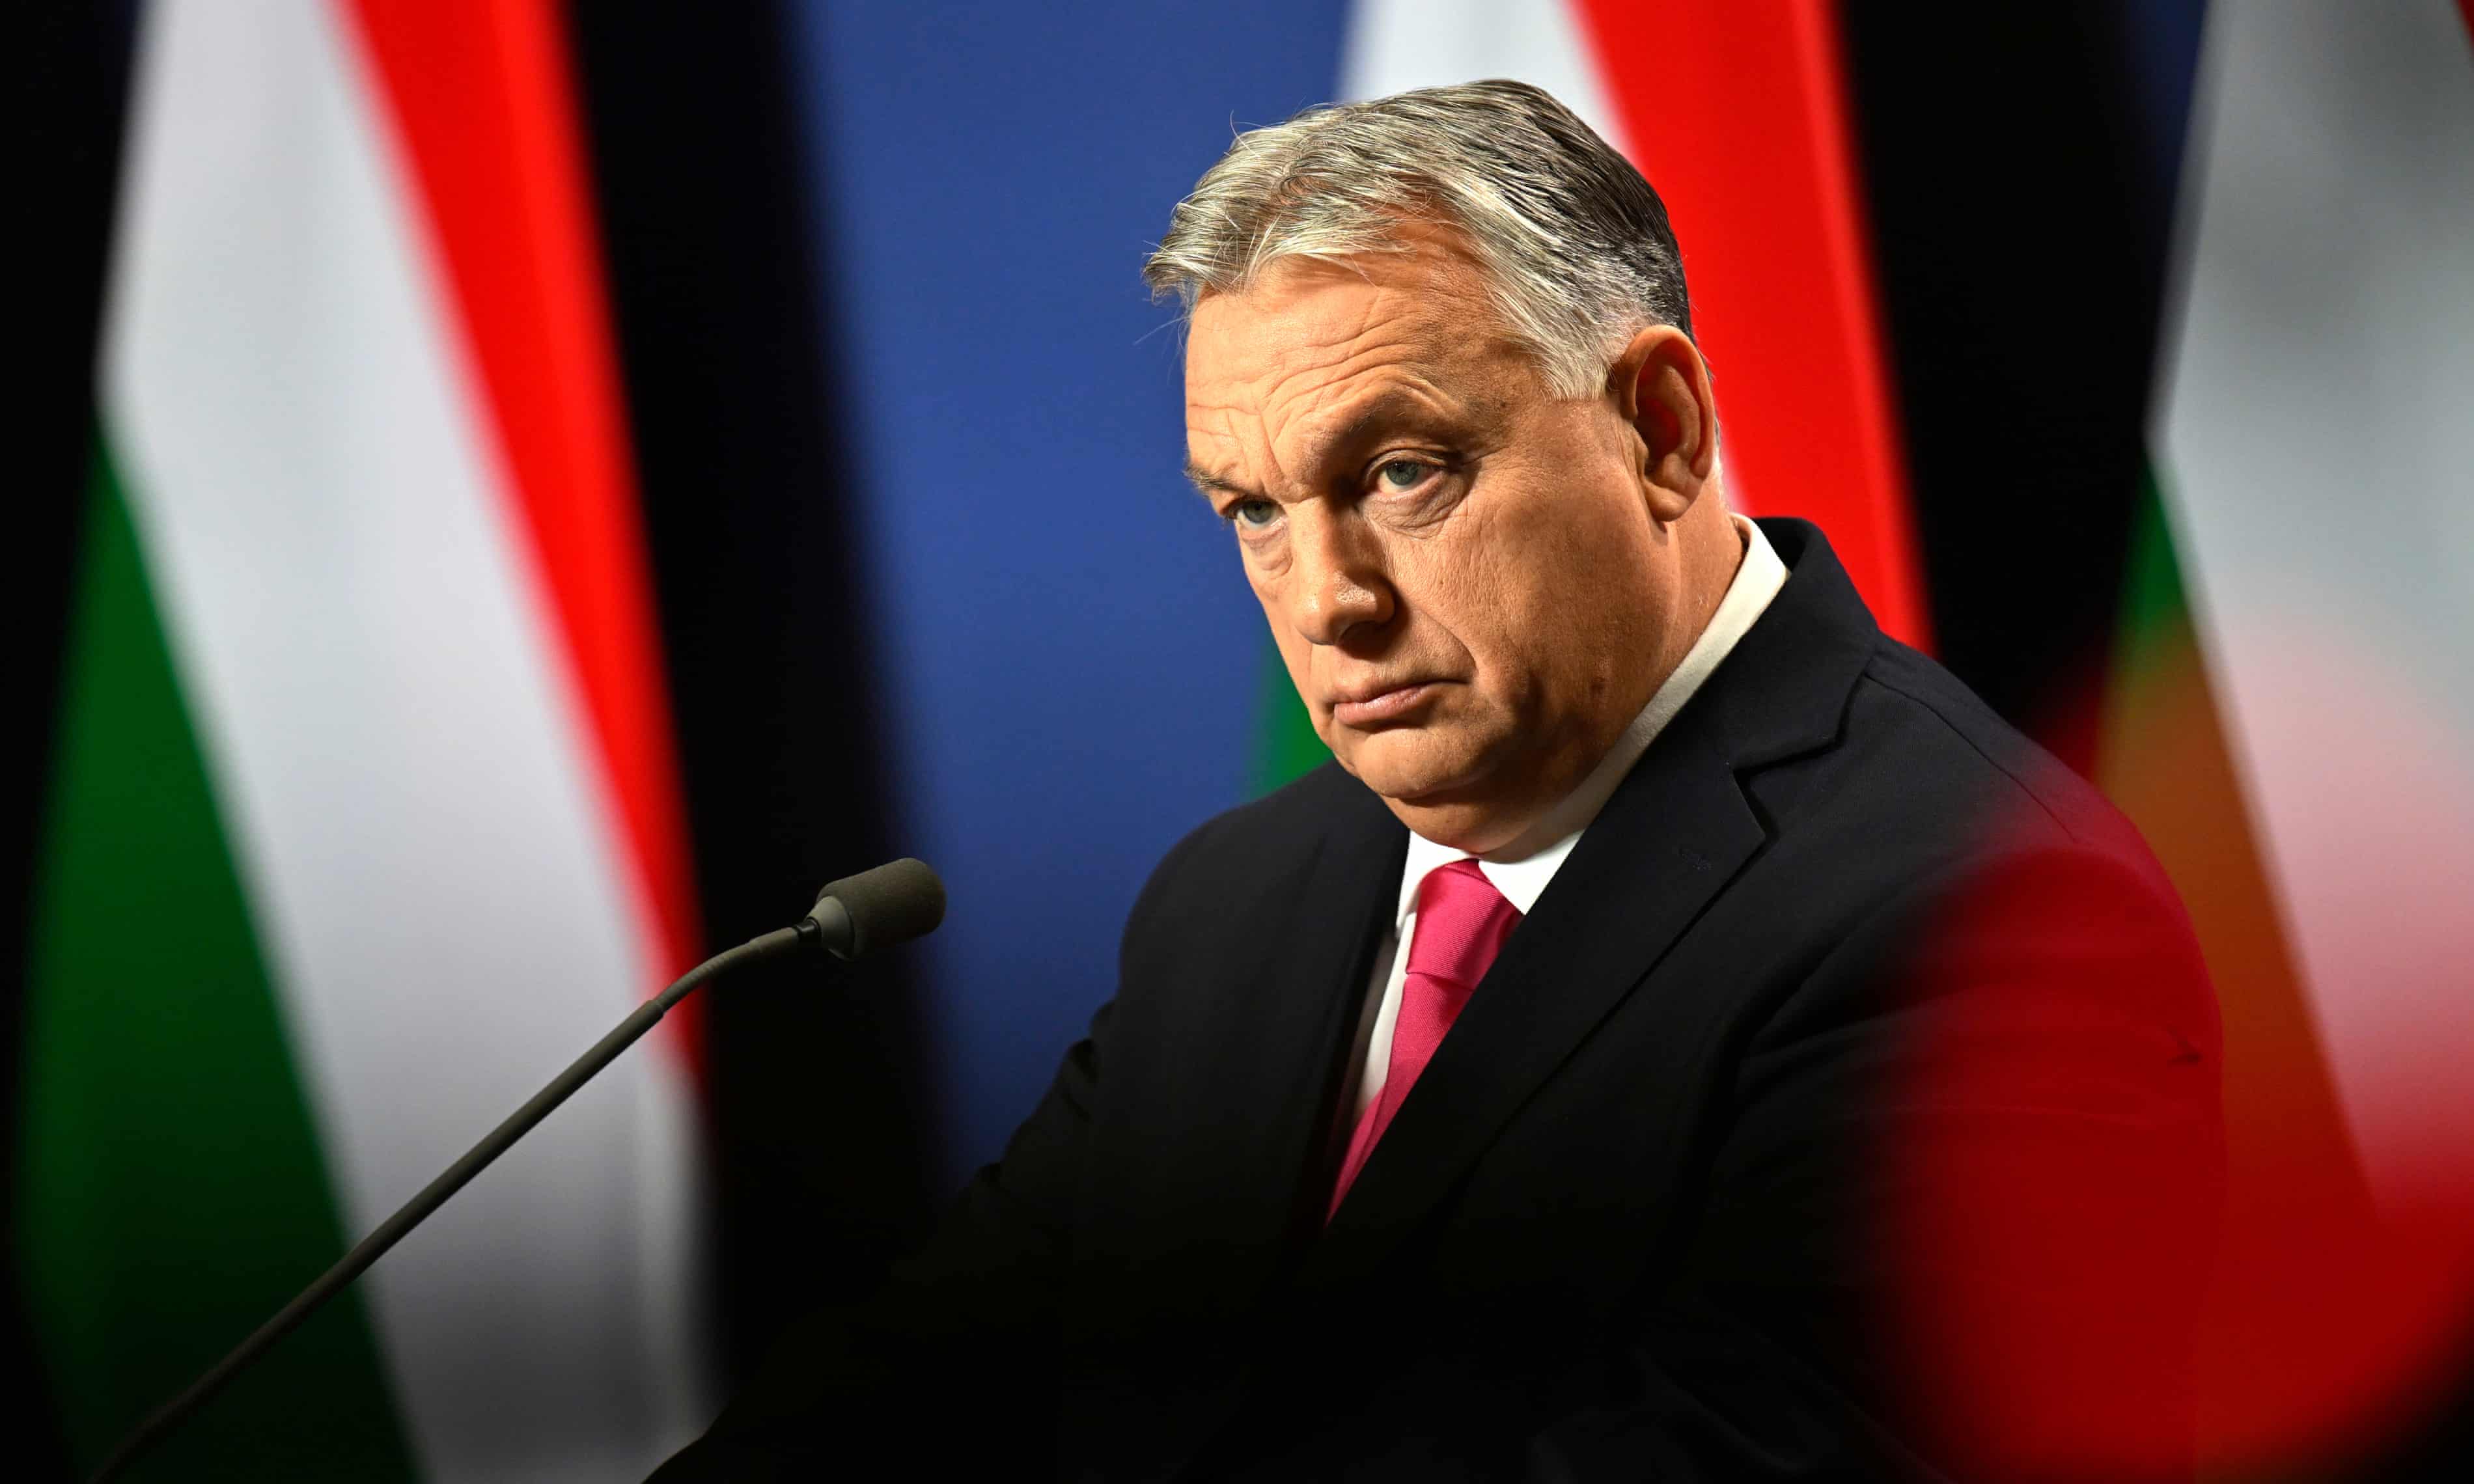 Secret EU plan ‘to sabotage Hungarian economy’ revealed as anger mounts at Orbán (theguardian.com)